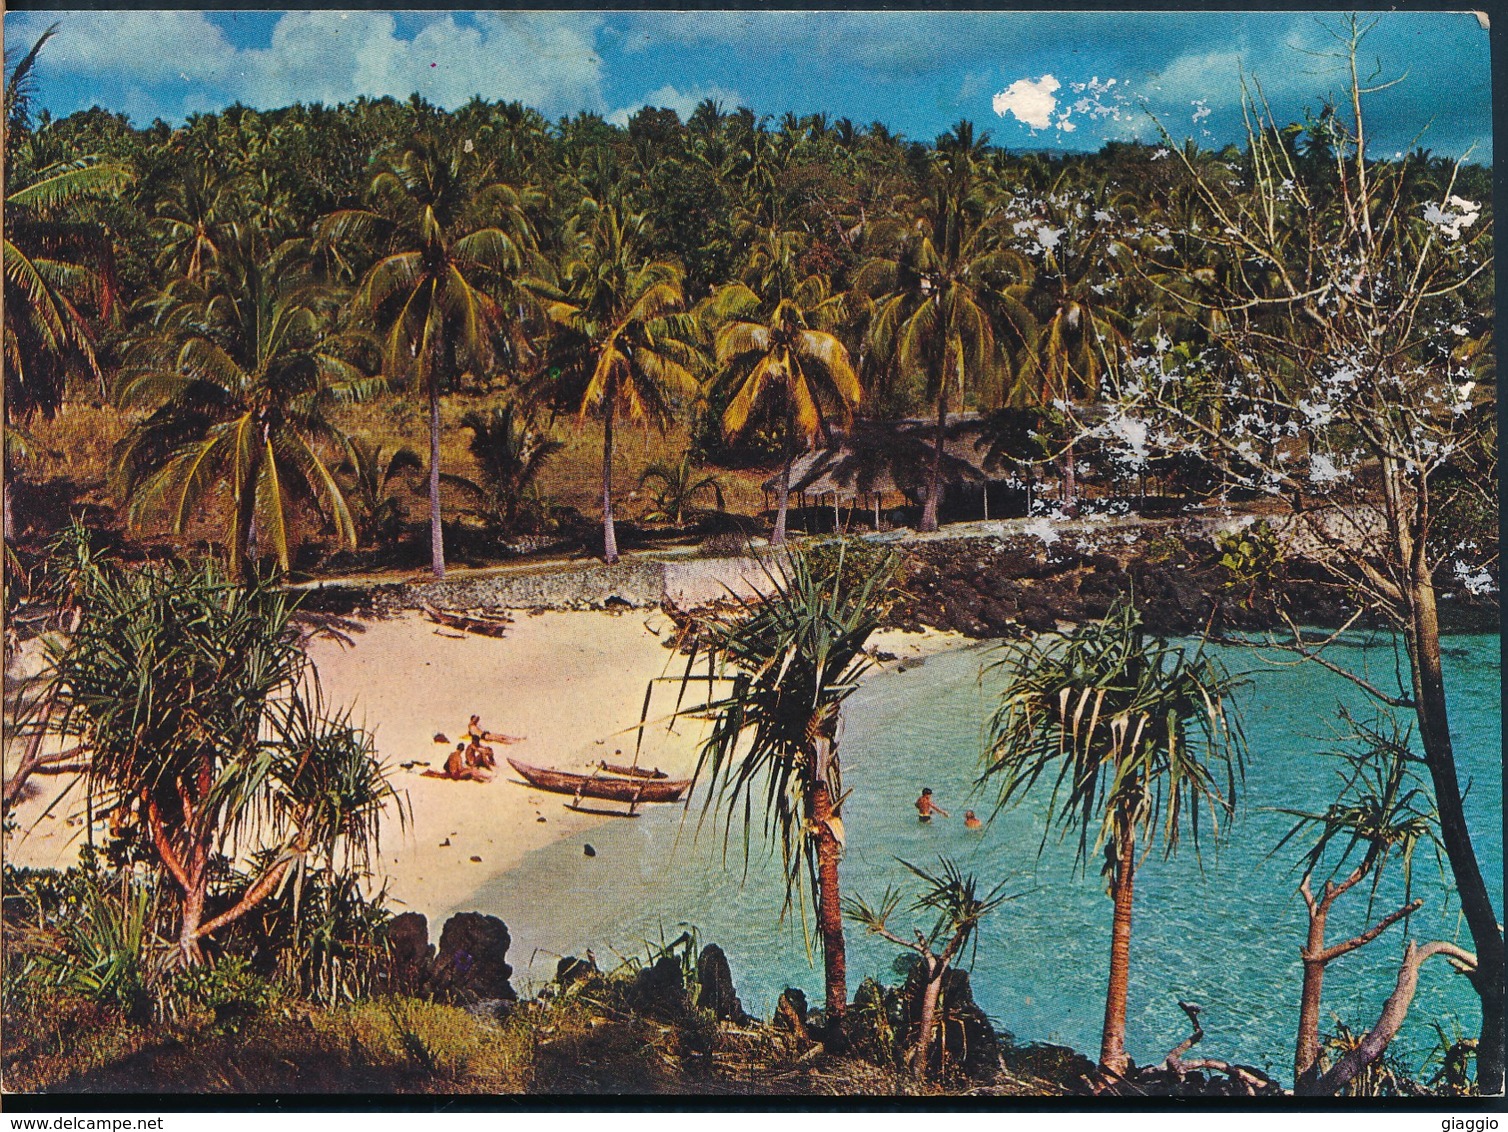 °°° 19305 - GRANDE COMORE - MORONI - HOTEL ITSANDRA °°° - Comoren